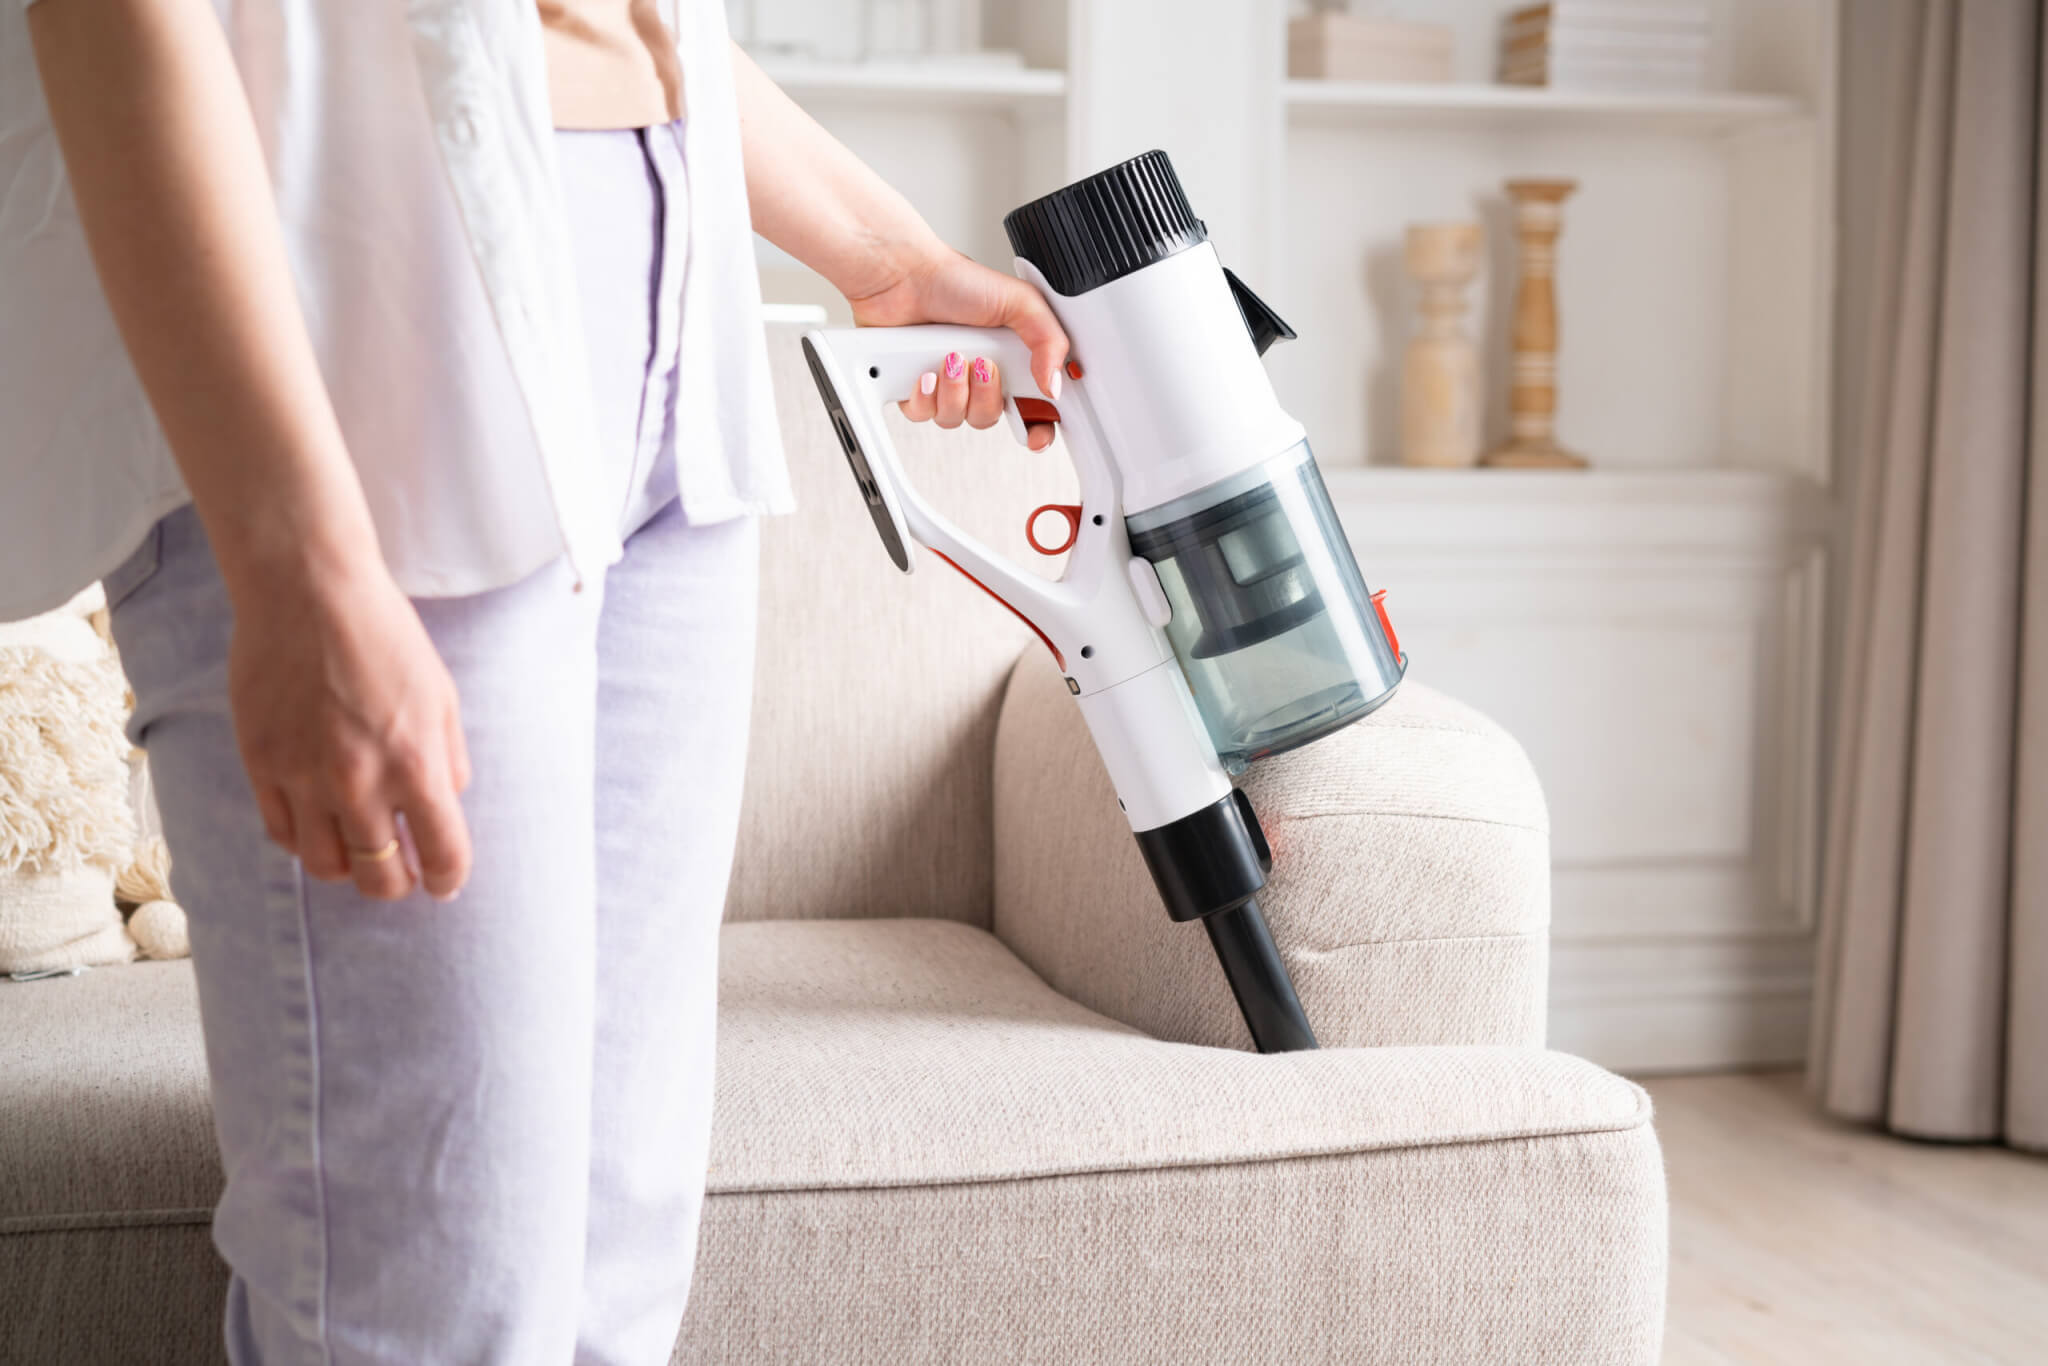 https://studyfinds.org/wp-content/uploads/2023/03/Woman-using-handheld-vacuum-scaled.jpeg